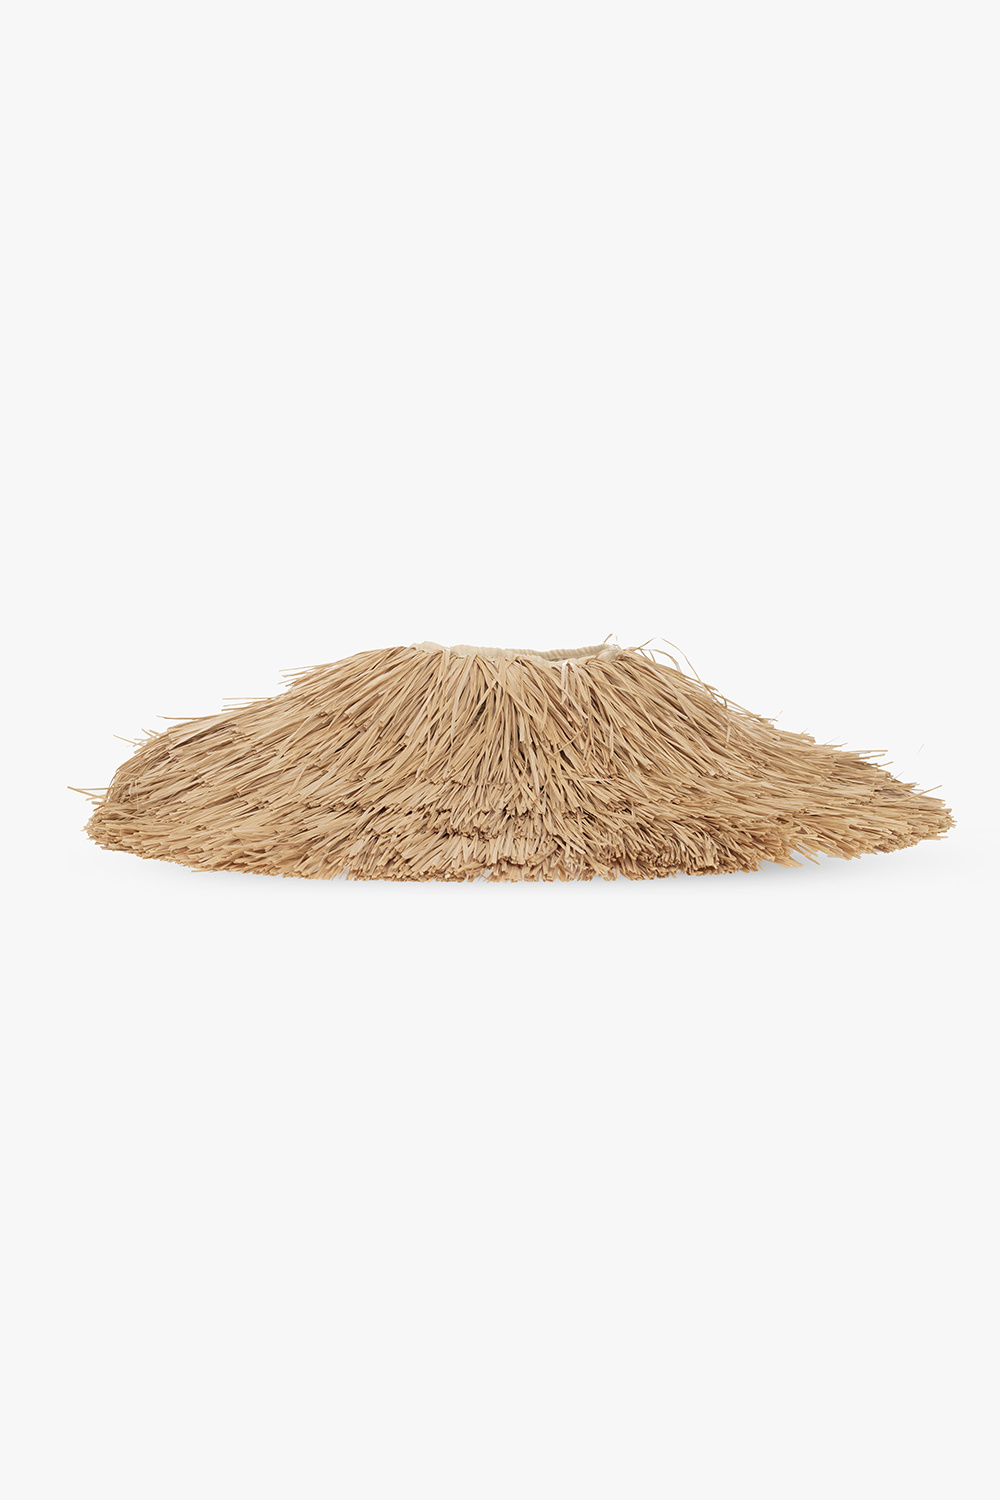 Cult Gaia ‘Solange’ straw reversible hat